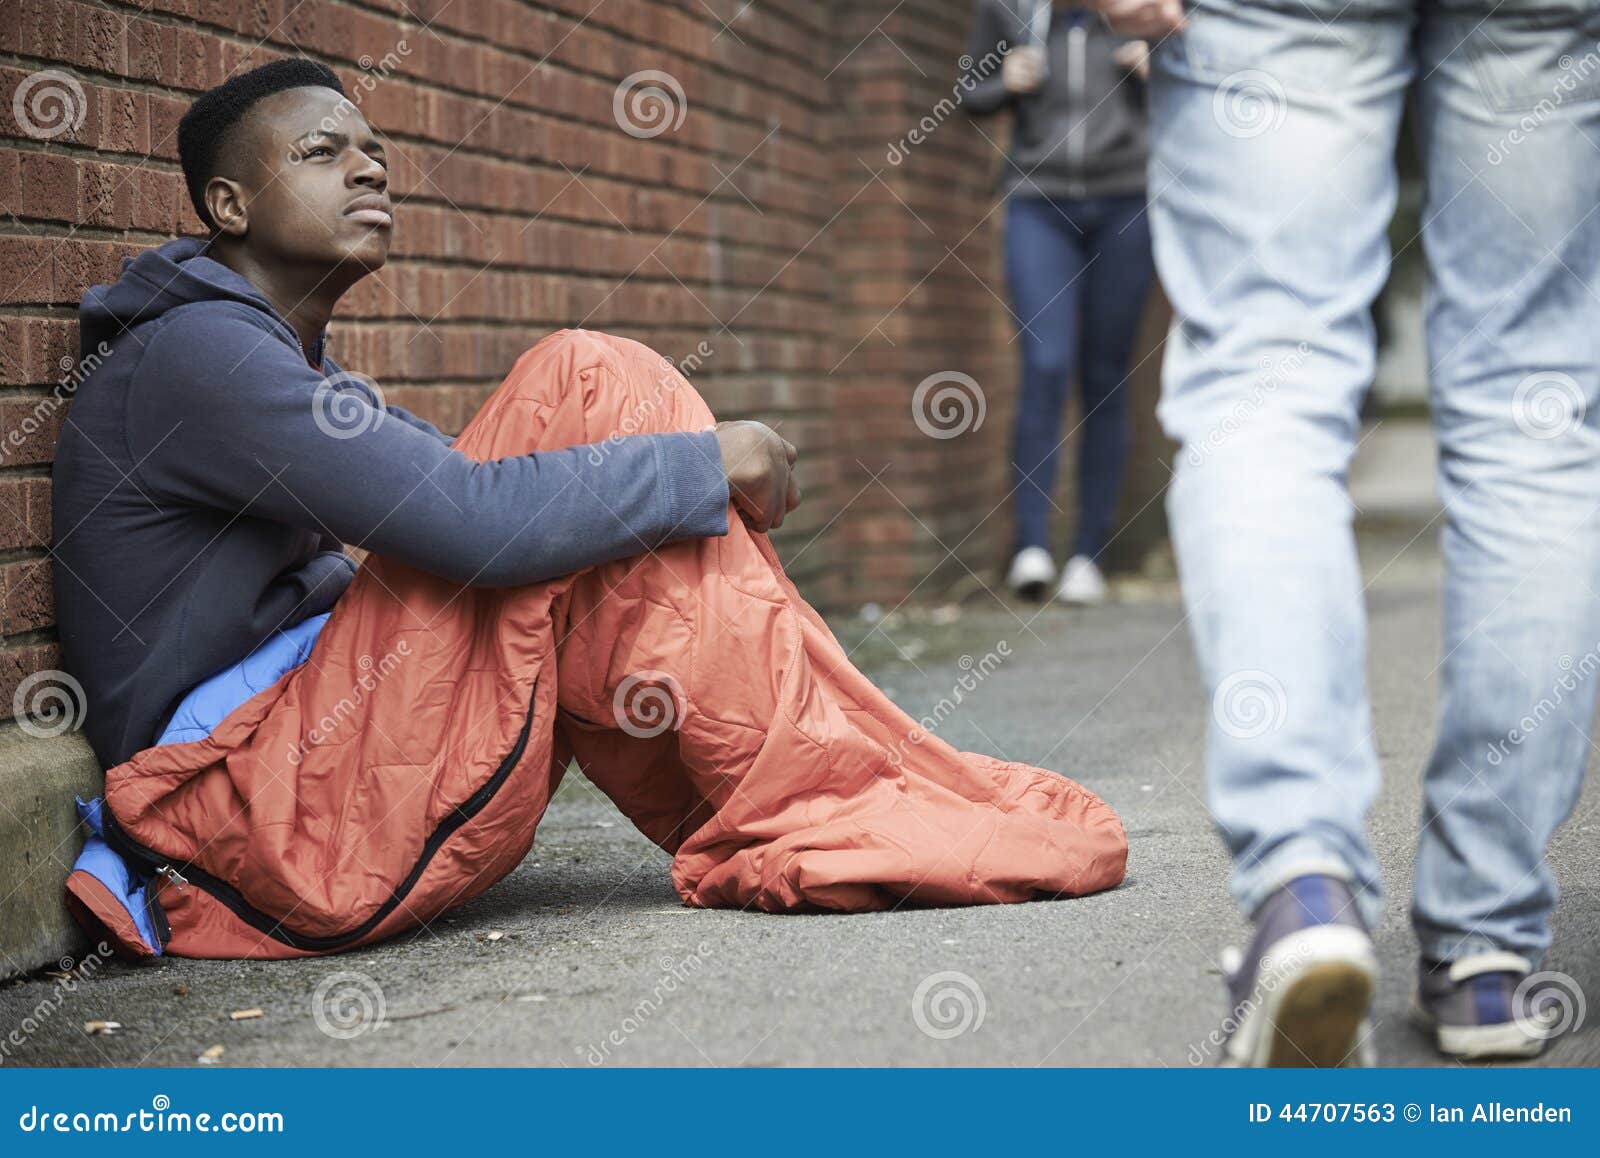 homeless teenage boy sleeping bag on the street